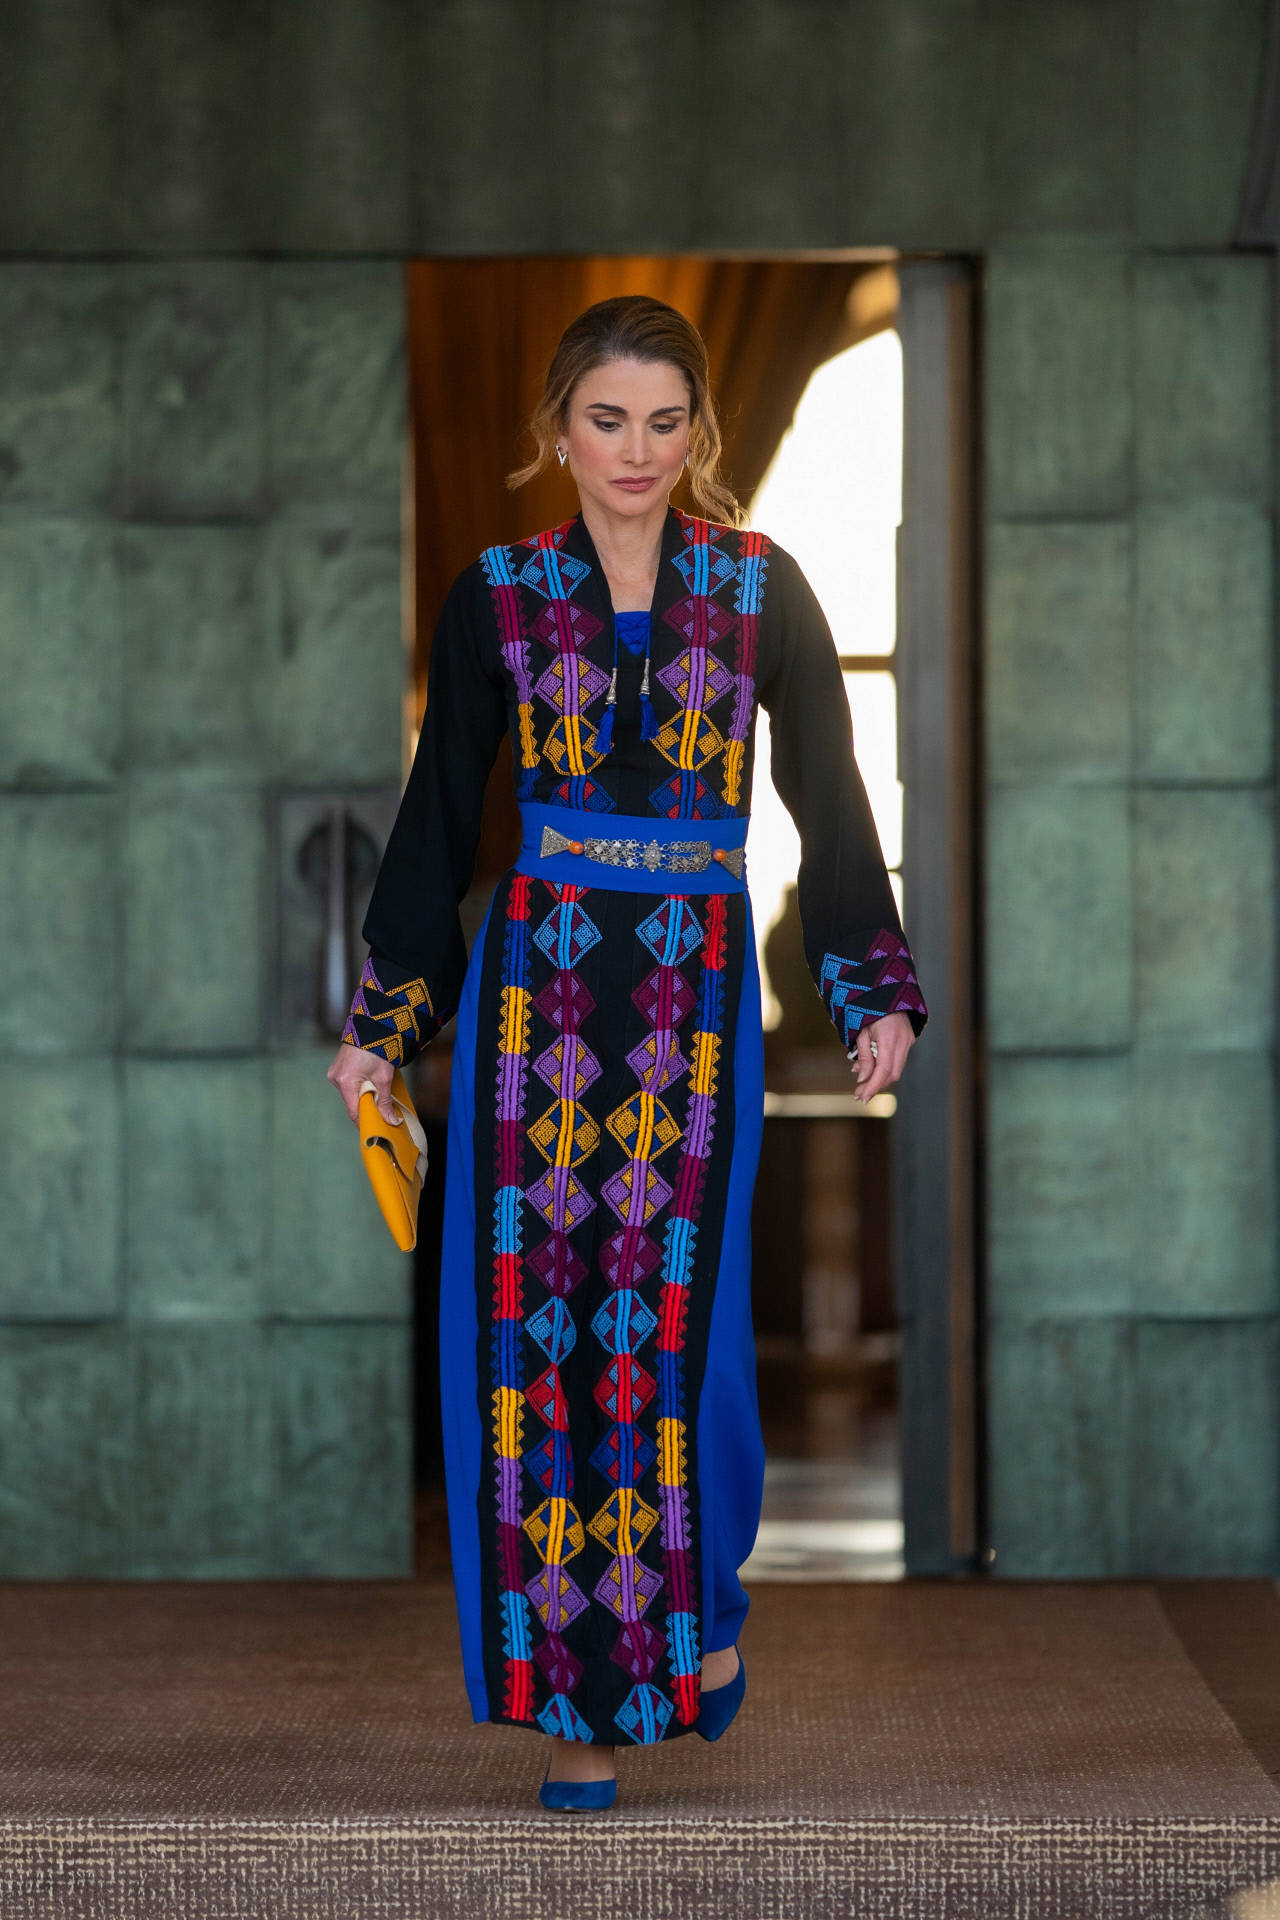 Rania de Jordania con vestido de fiesta tipo túnica